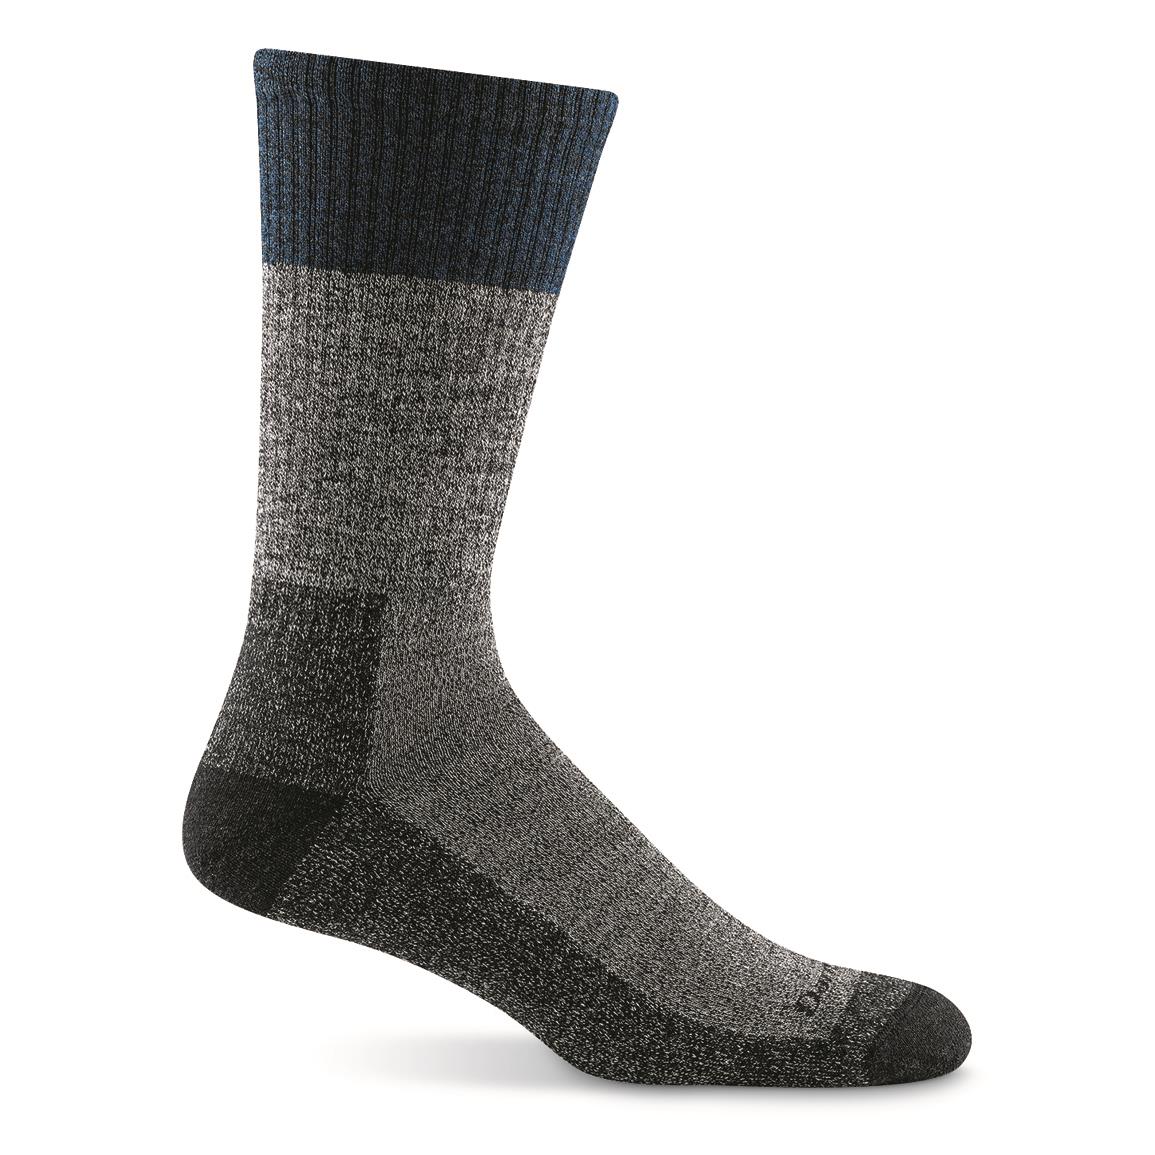 Realtree Men's Merino Wool Blend Boot Socks, 2 Pairs - 717882, Socks at ...